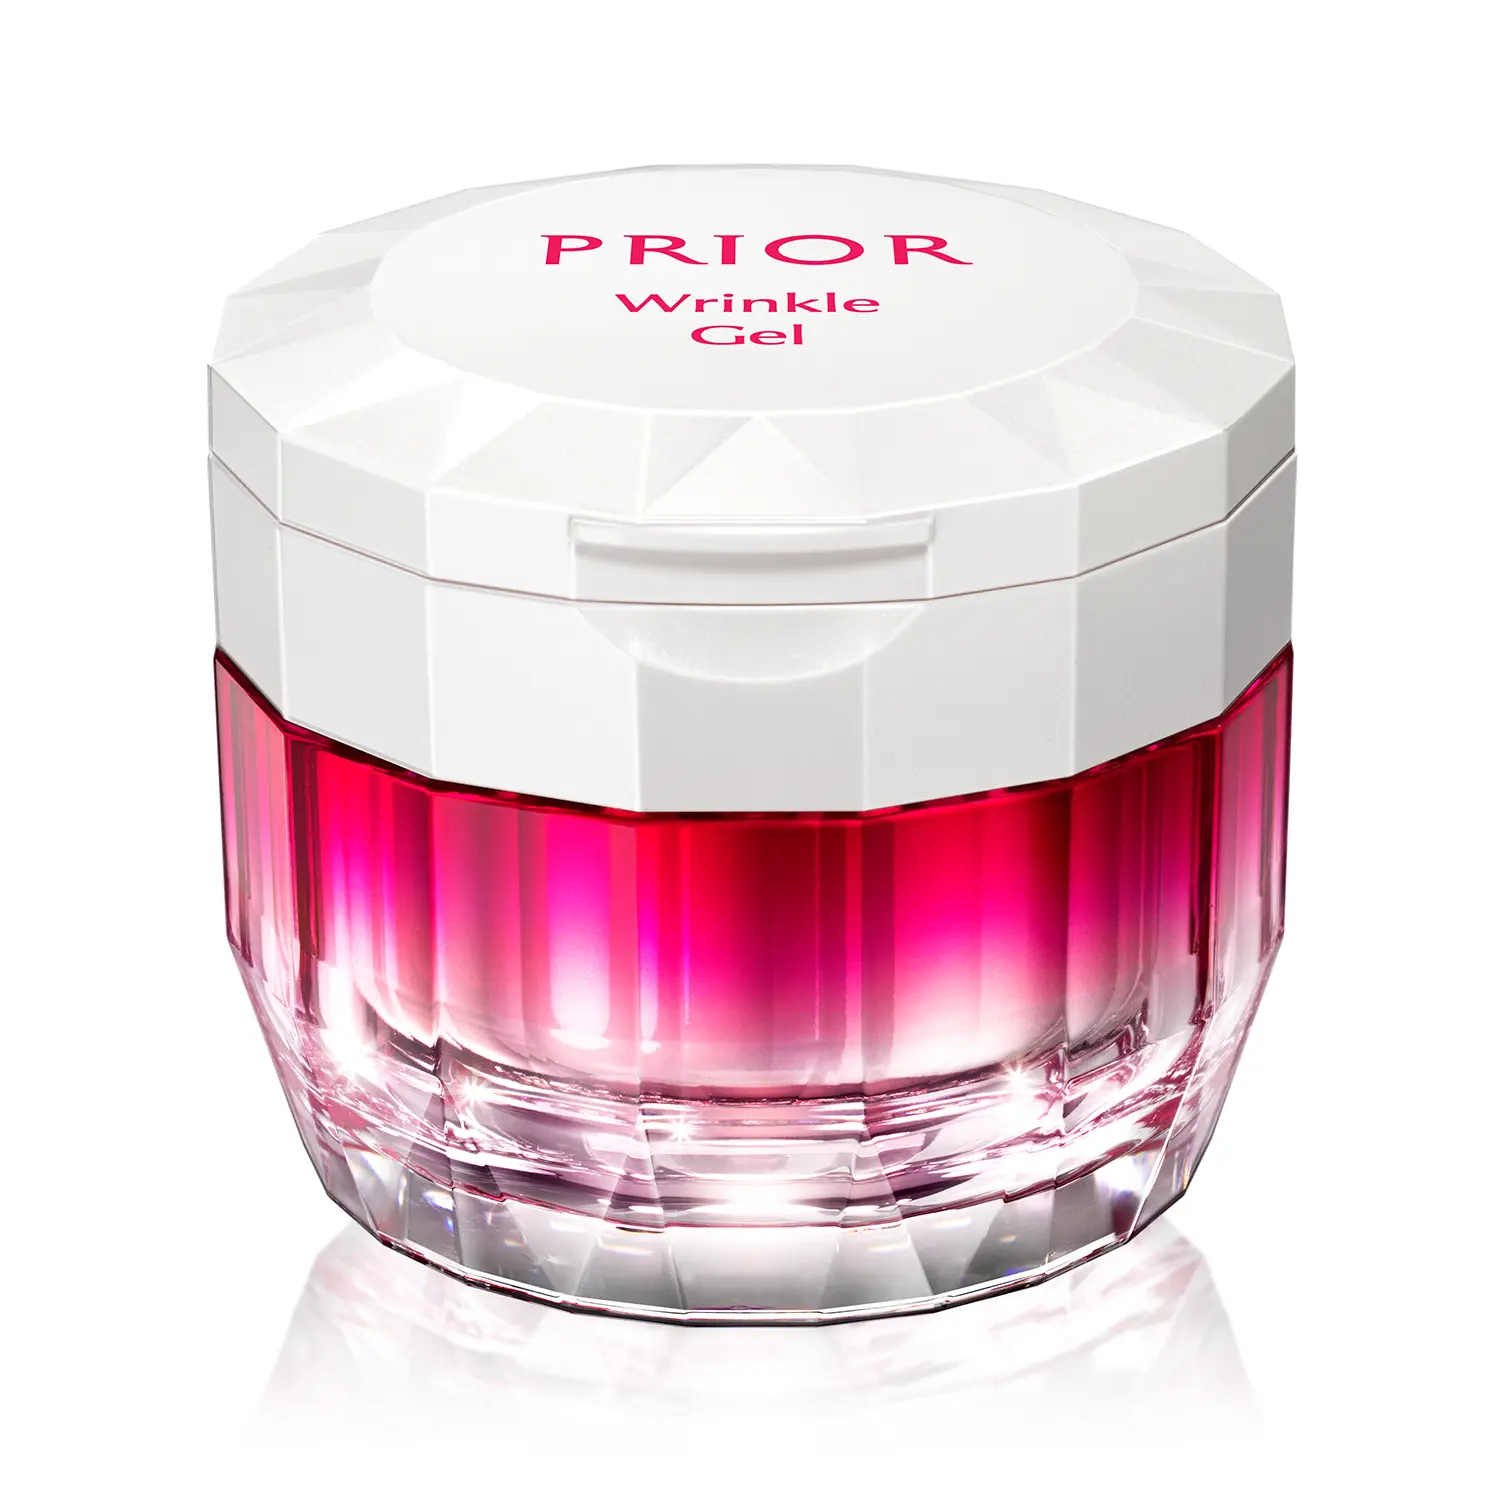 Shiseido PRIOR Medicated Wrinkle Beauty Corset Gel, 90 g - buy online from  Japan